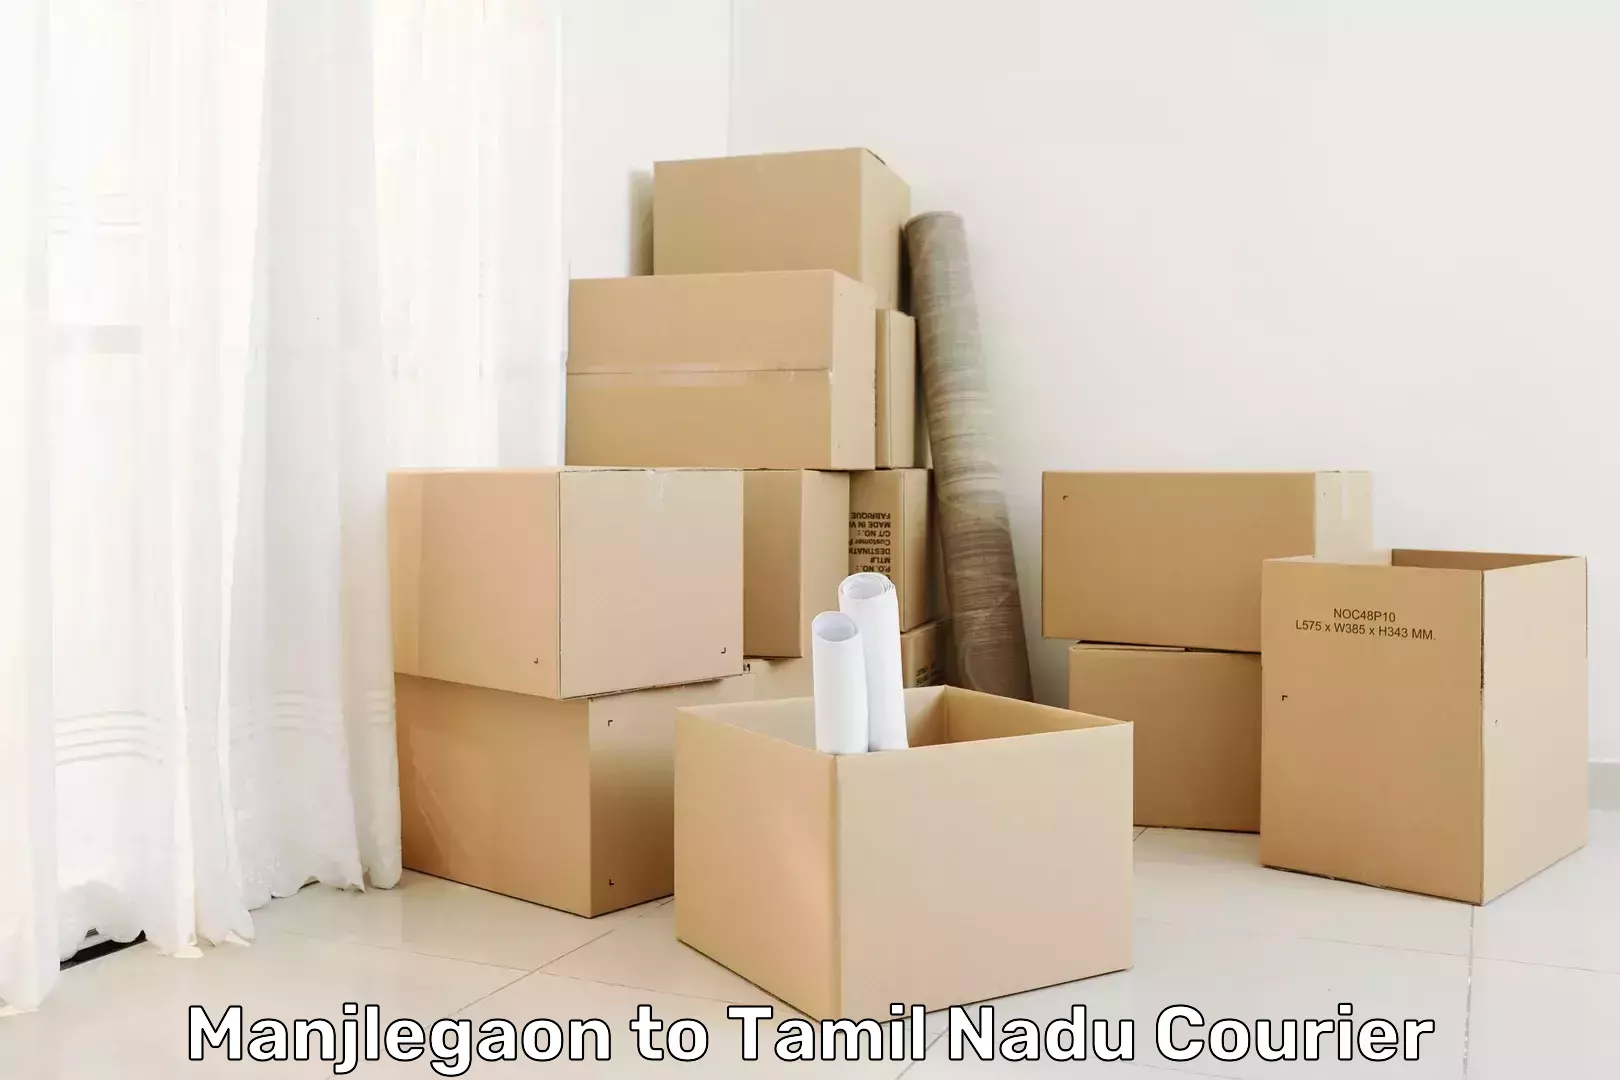 24-hour courier services Manjlegaon to Tirukalukundram